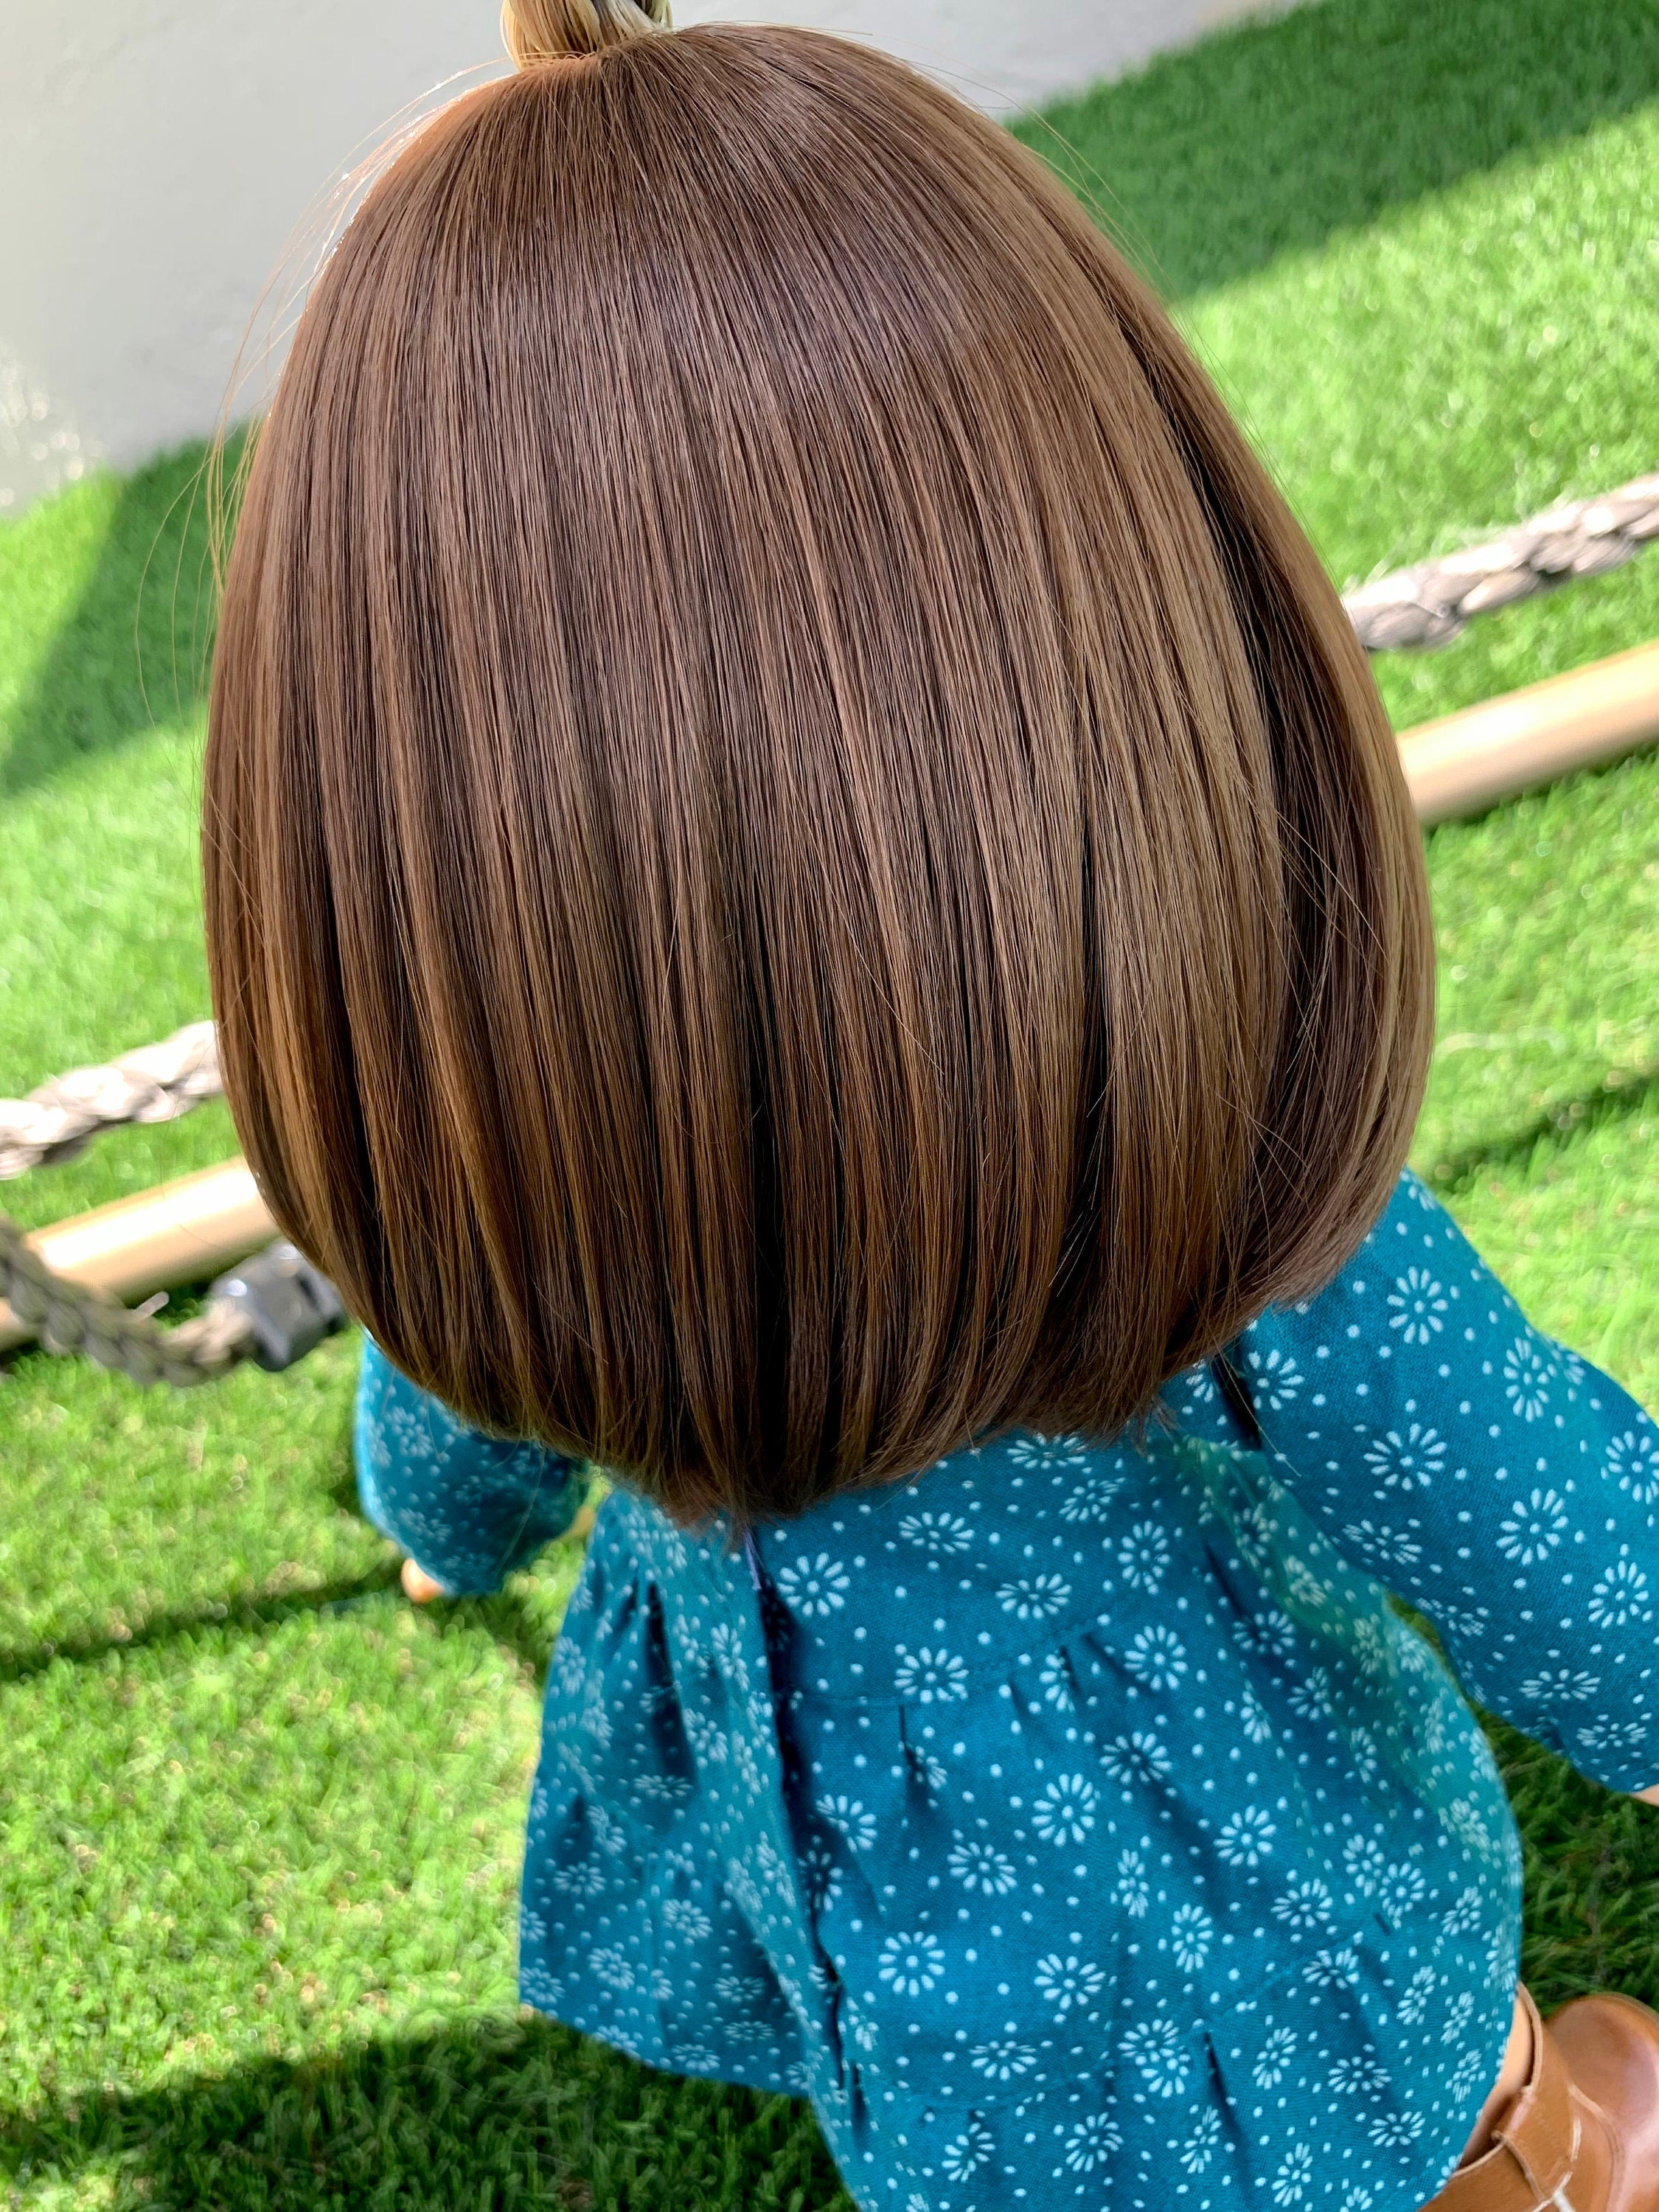 Custom doll wig for 18" American Girl Dolls -Heat & Tangle Resistant - fits 10-11" size of 18" dolls OG Blythe BJD Gotz dark brown bangs